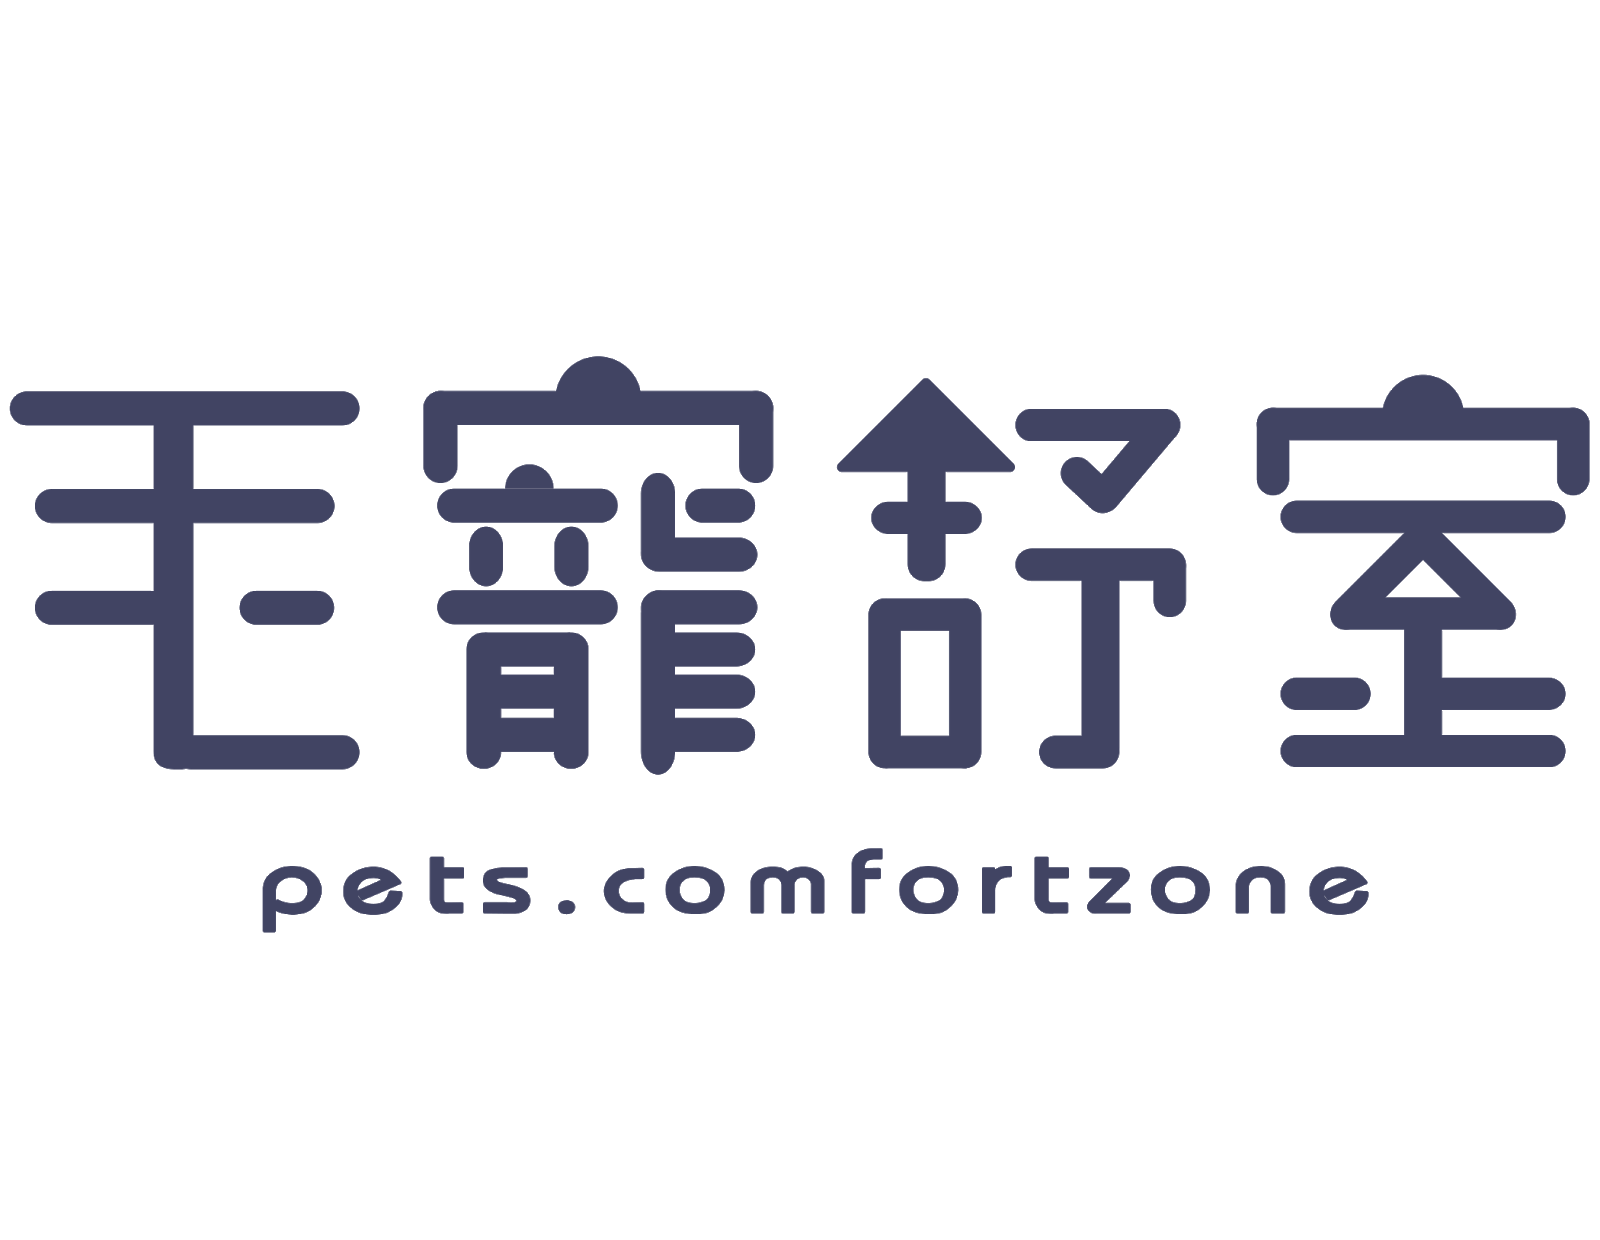 毛寵舒室 pets.comfortzone 官方頁